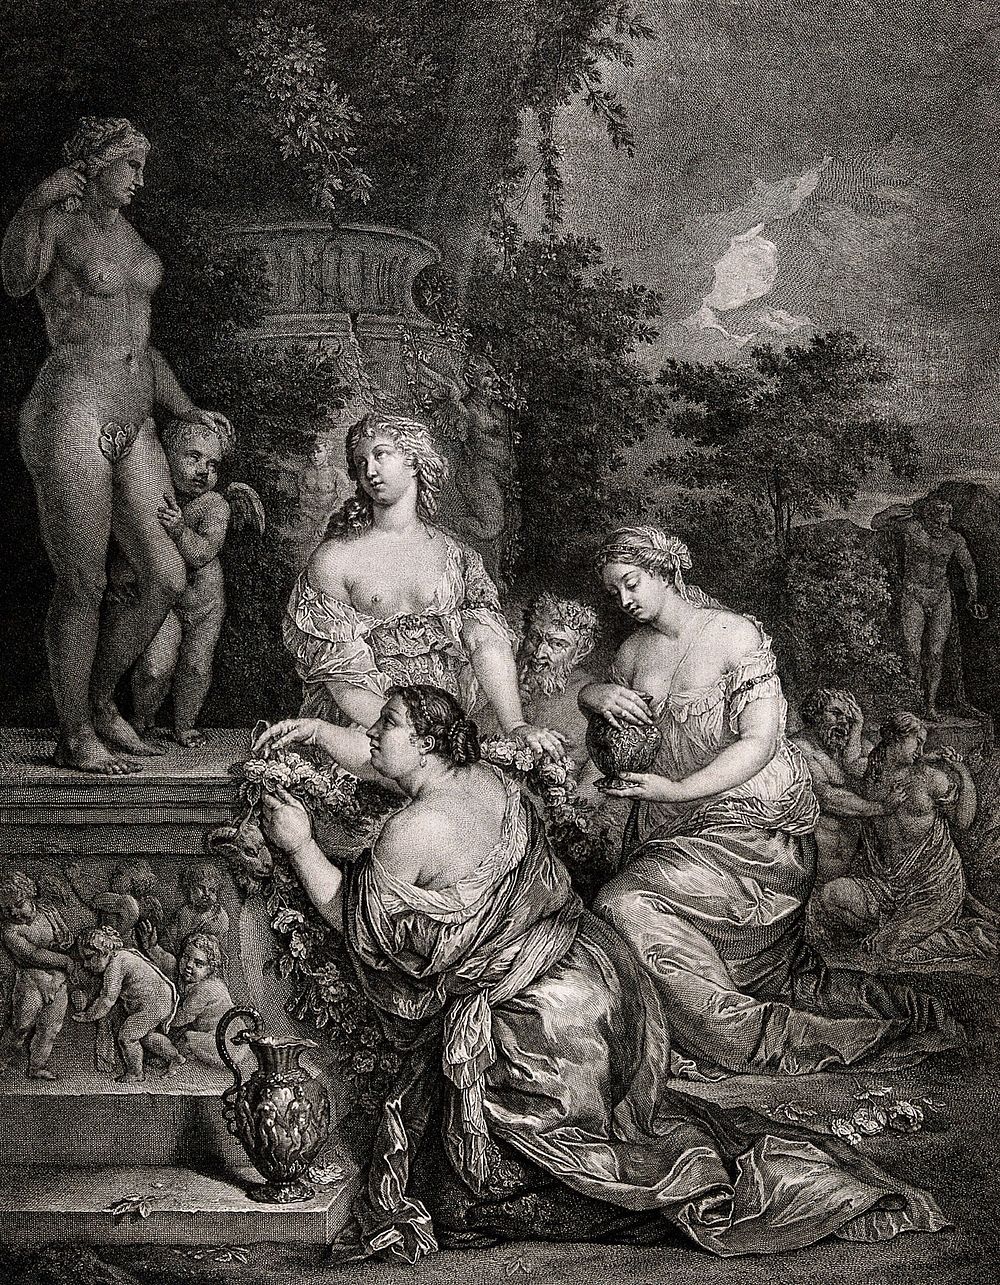 Three women praying to Venus (Aphrodite). Engraving by J.D. Dugourc, 1772, after C. Netscher.